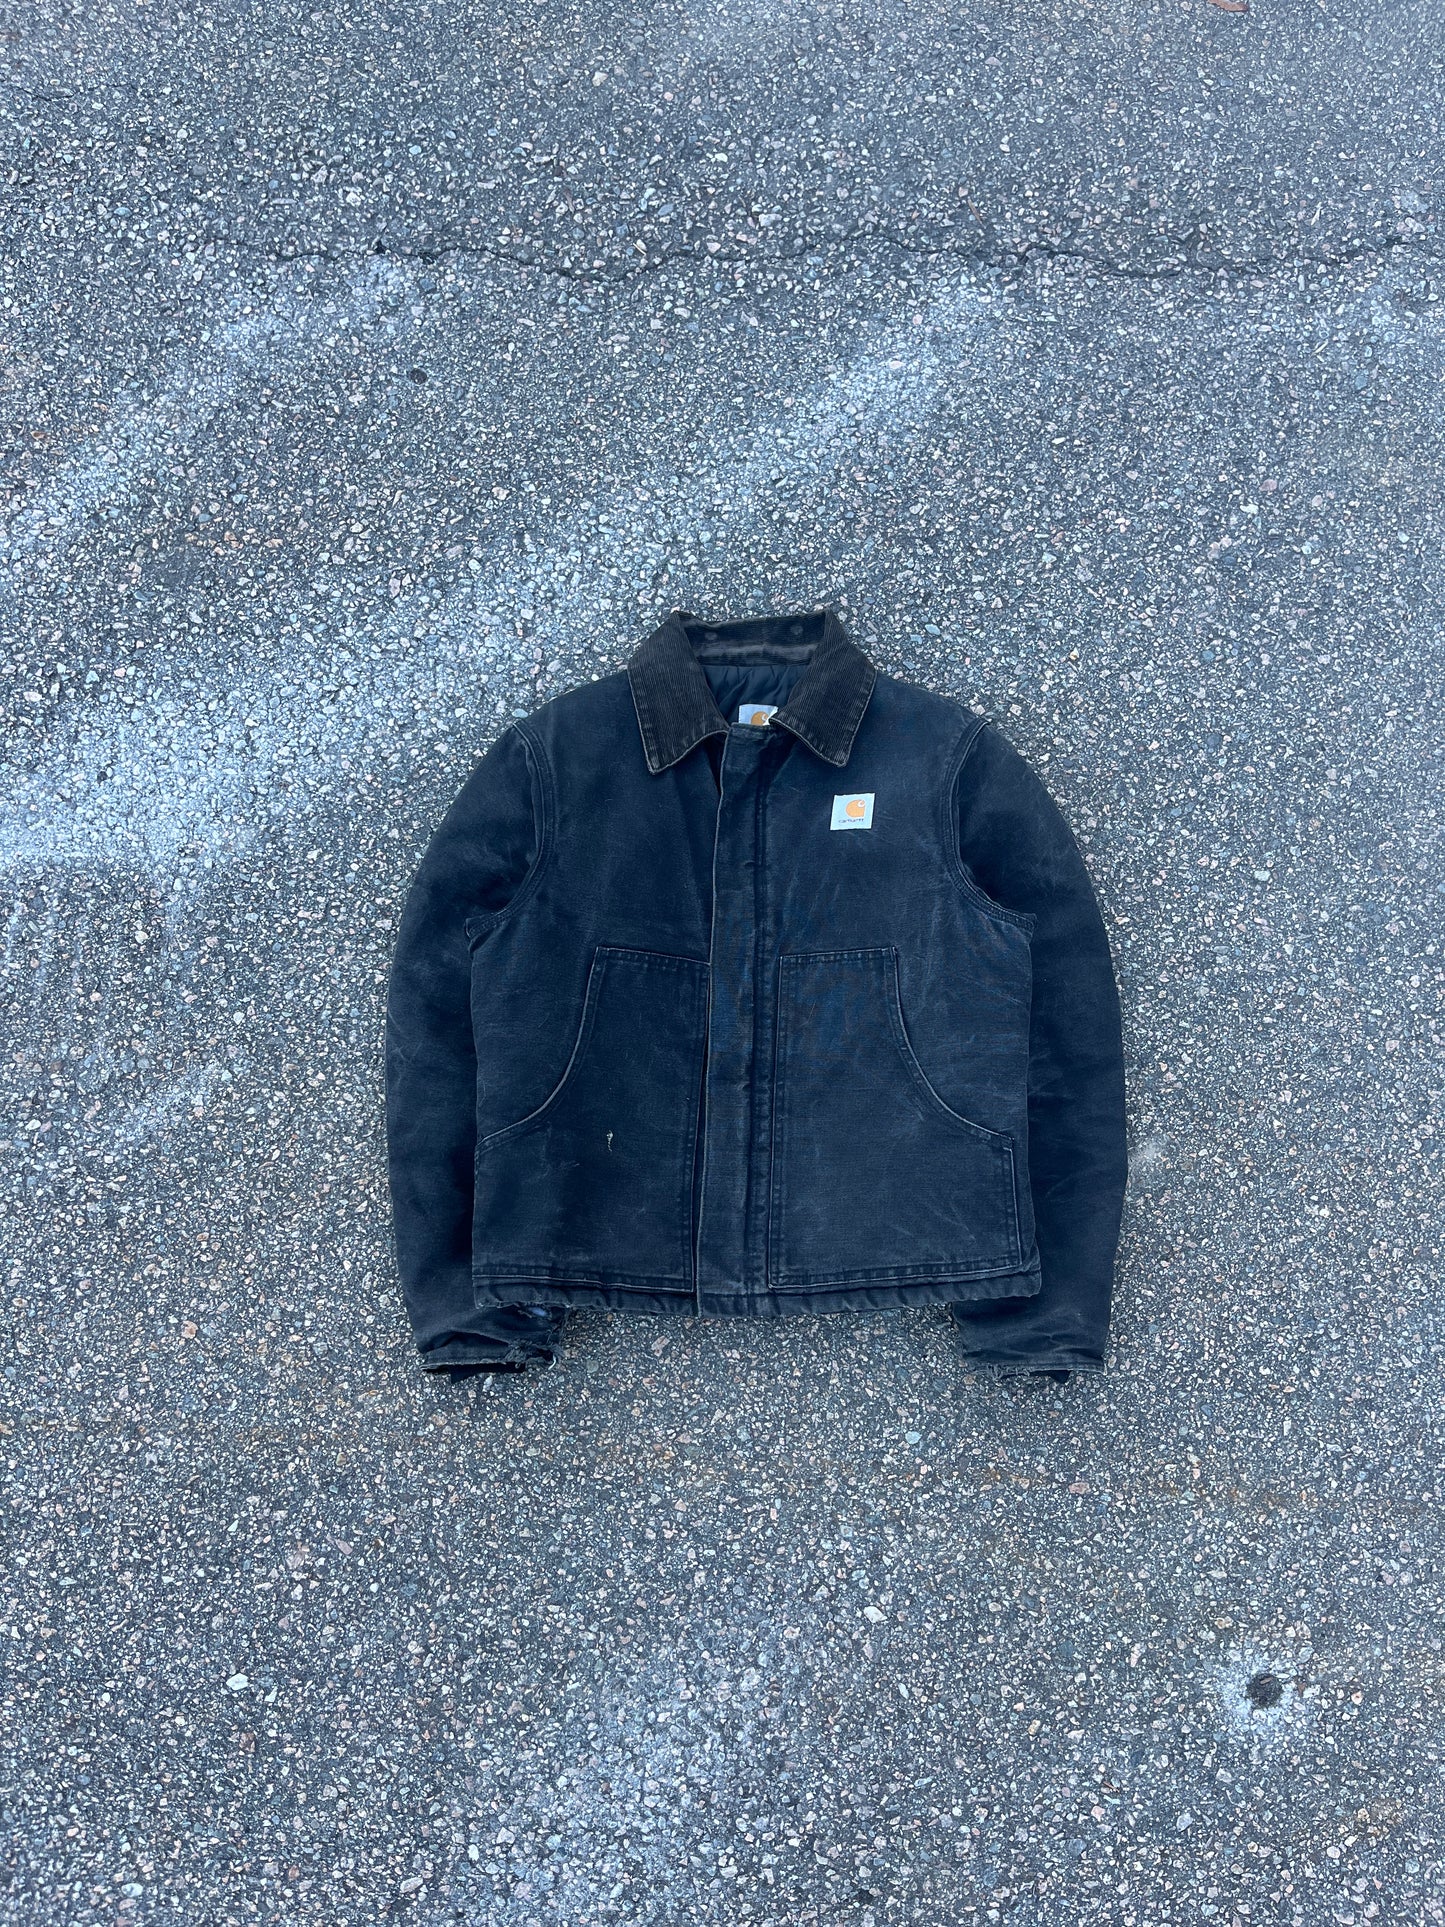 Faded Black Carhartt Arctic Jacket - Fits S-M